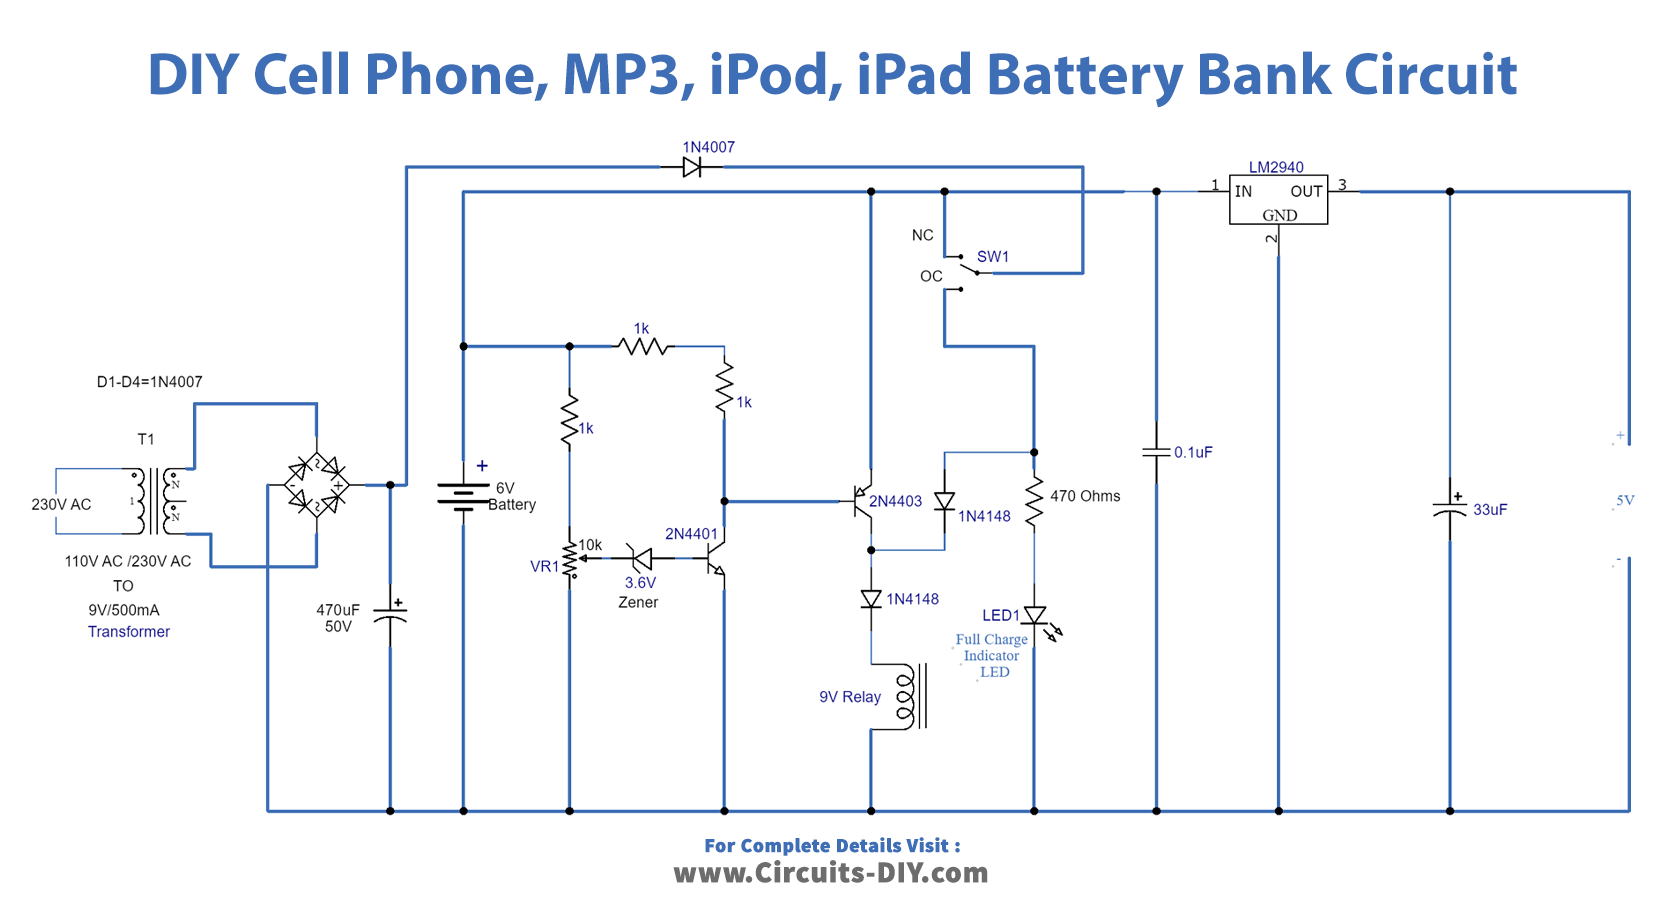 DIY Cell Phone, MP3, iPod, iPad Battery Bank Circuit